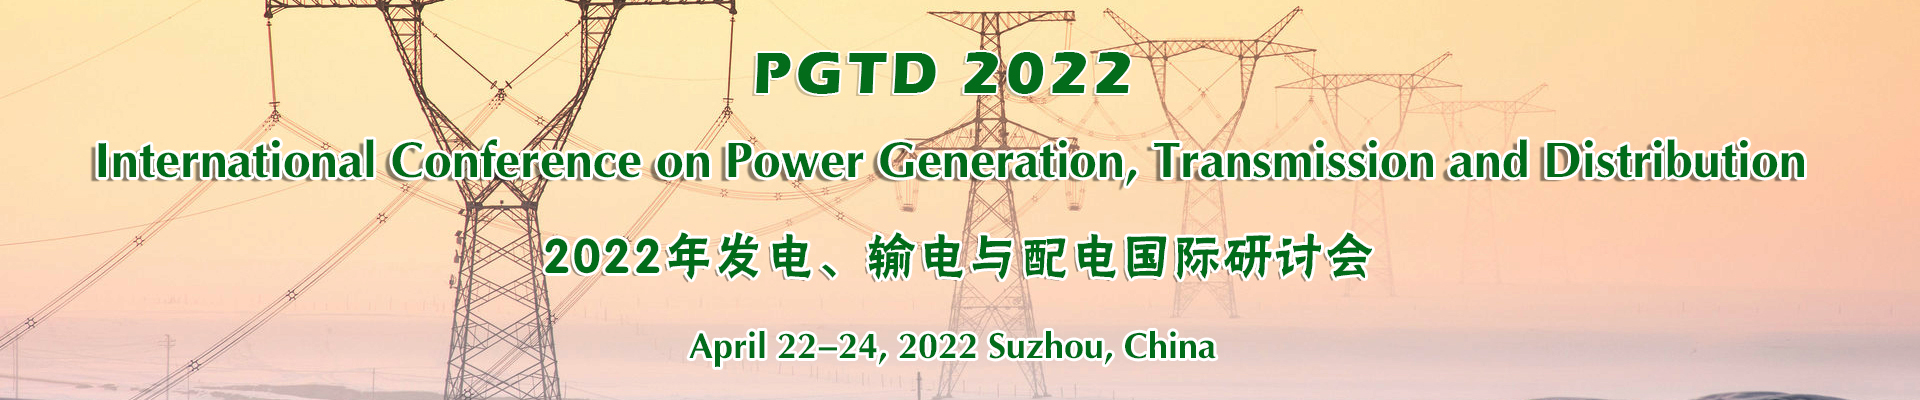 Int'l Conference on Power Generation, Transmission and Distribution (PGTD 2022), Suzhou, Jiangsu, China